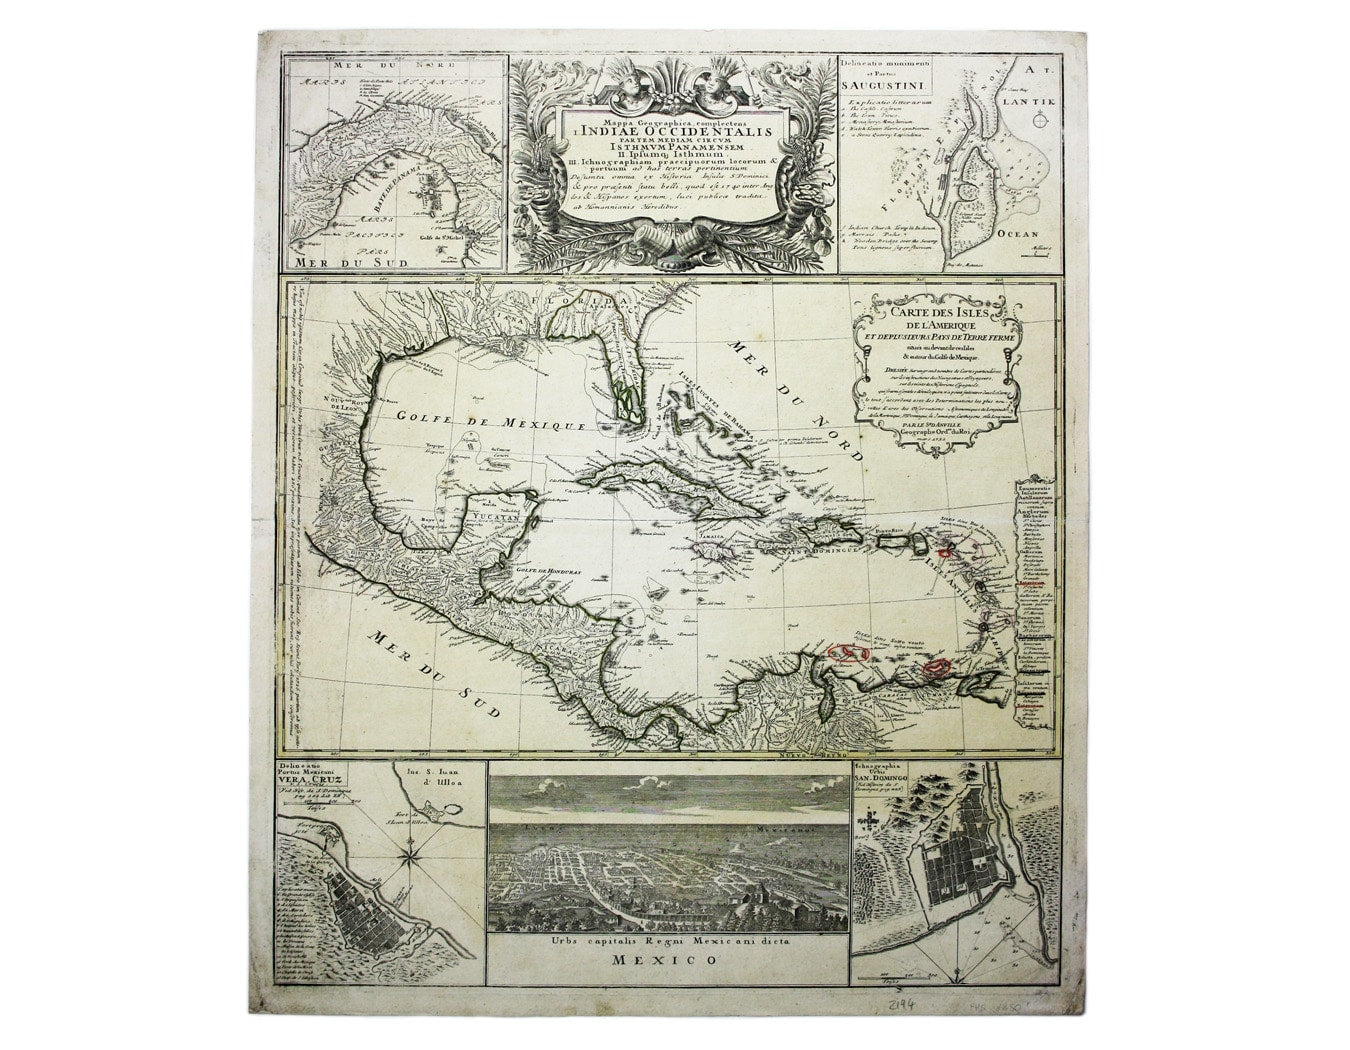 Homann Heirs’ Map of the Caribbean & Central America